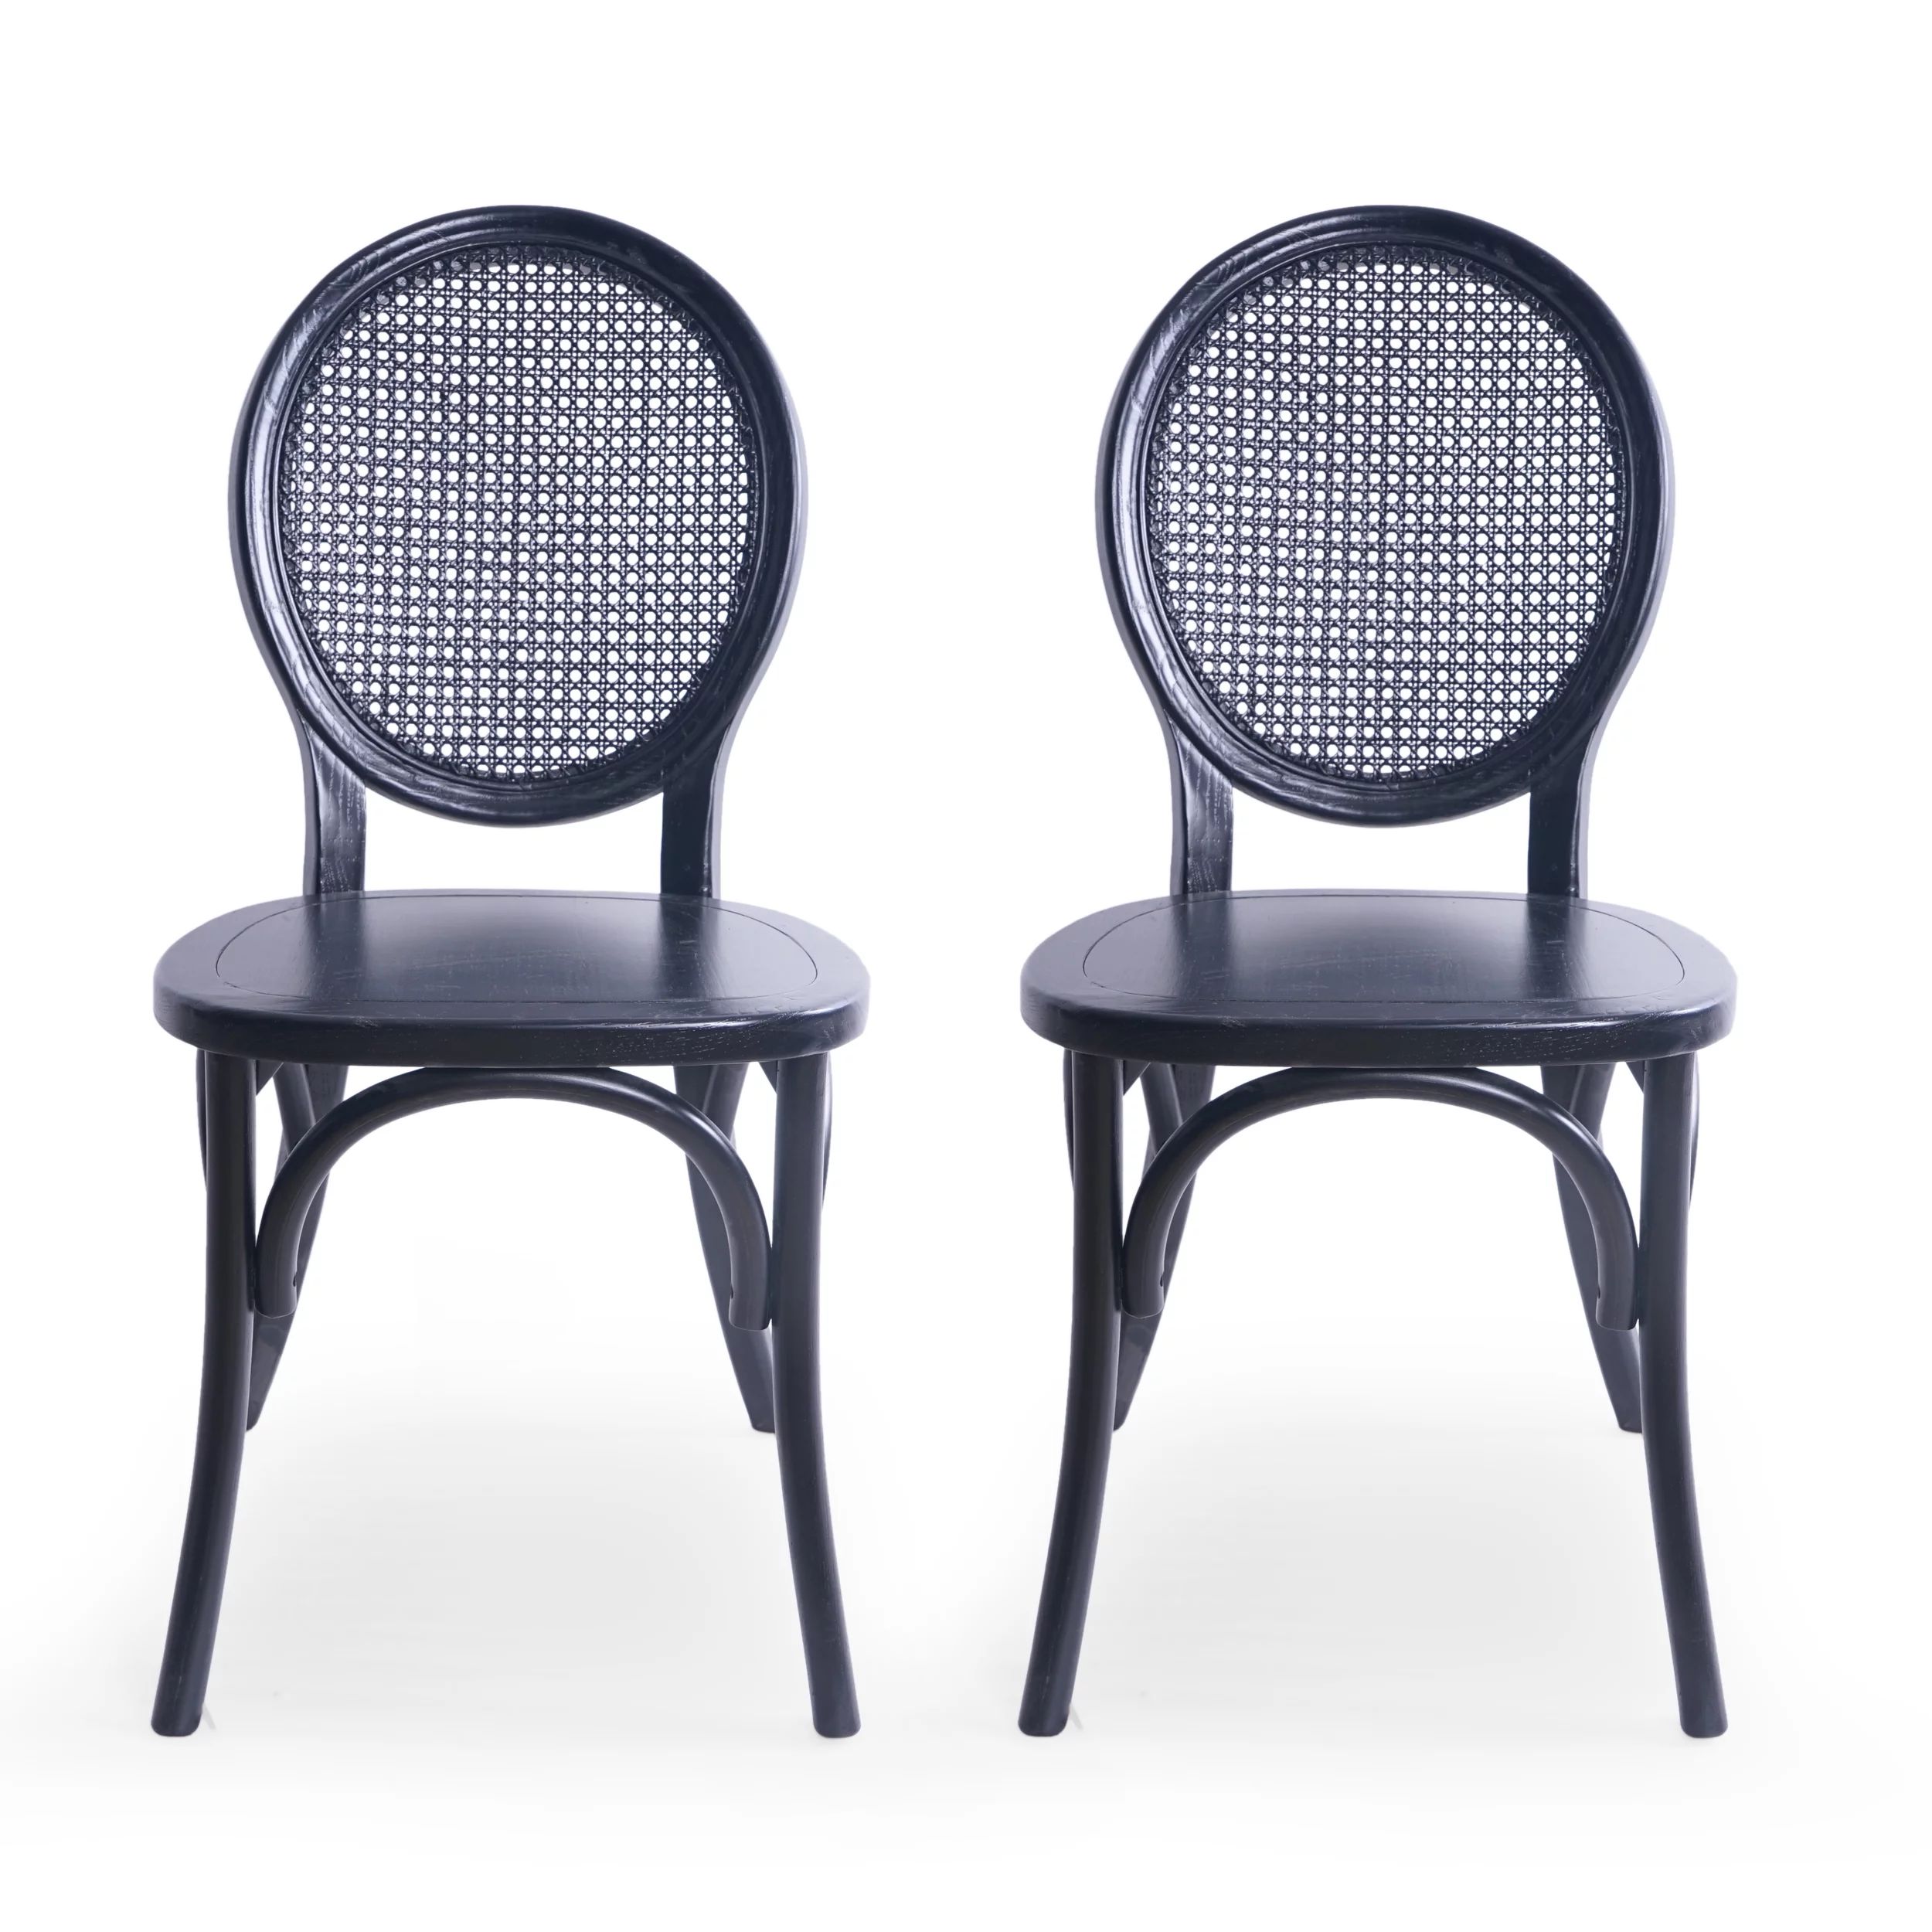 Ruhan Elm Wood and Rattan Dining Chair (Set of 2), Matte Black | Walmart (US)